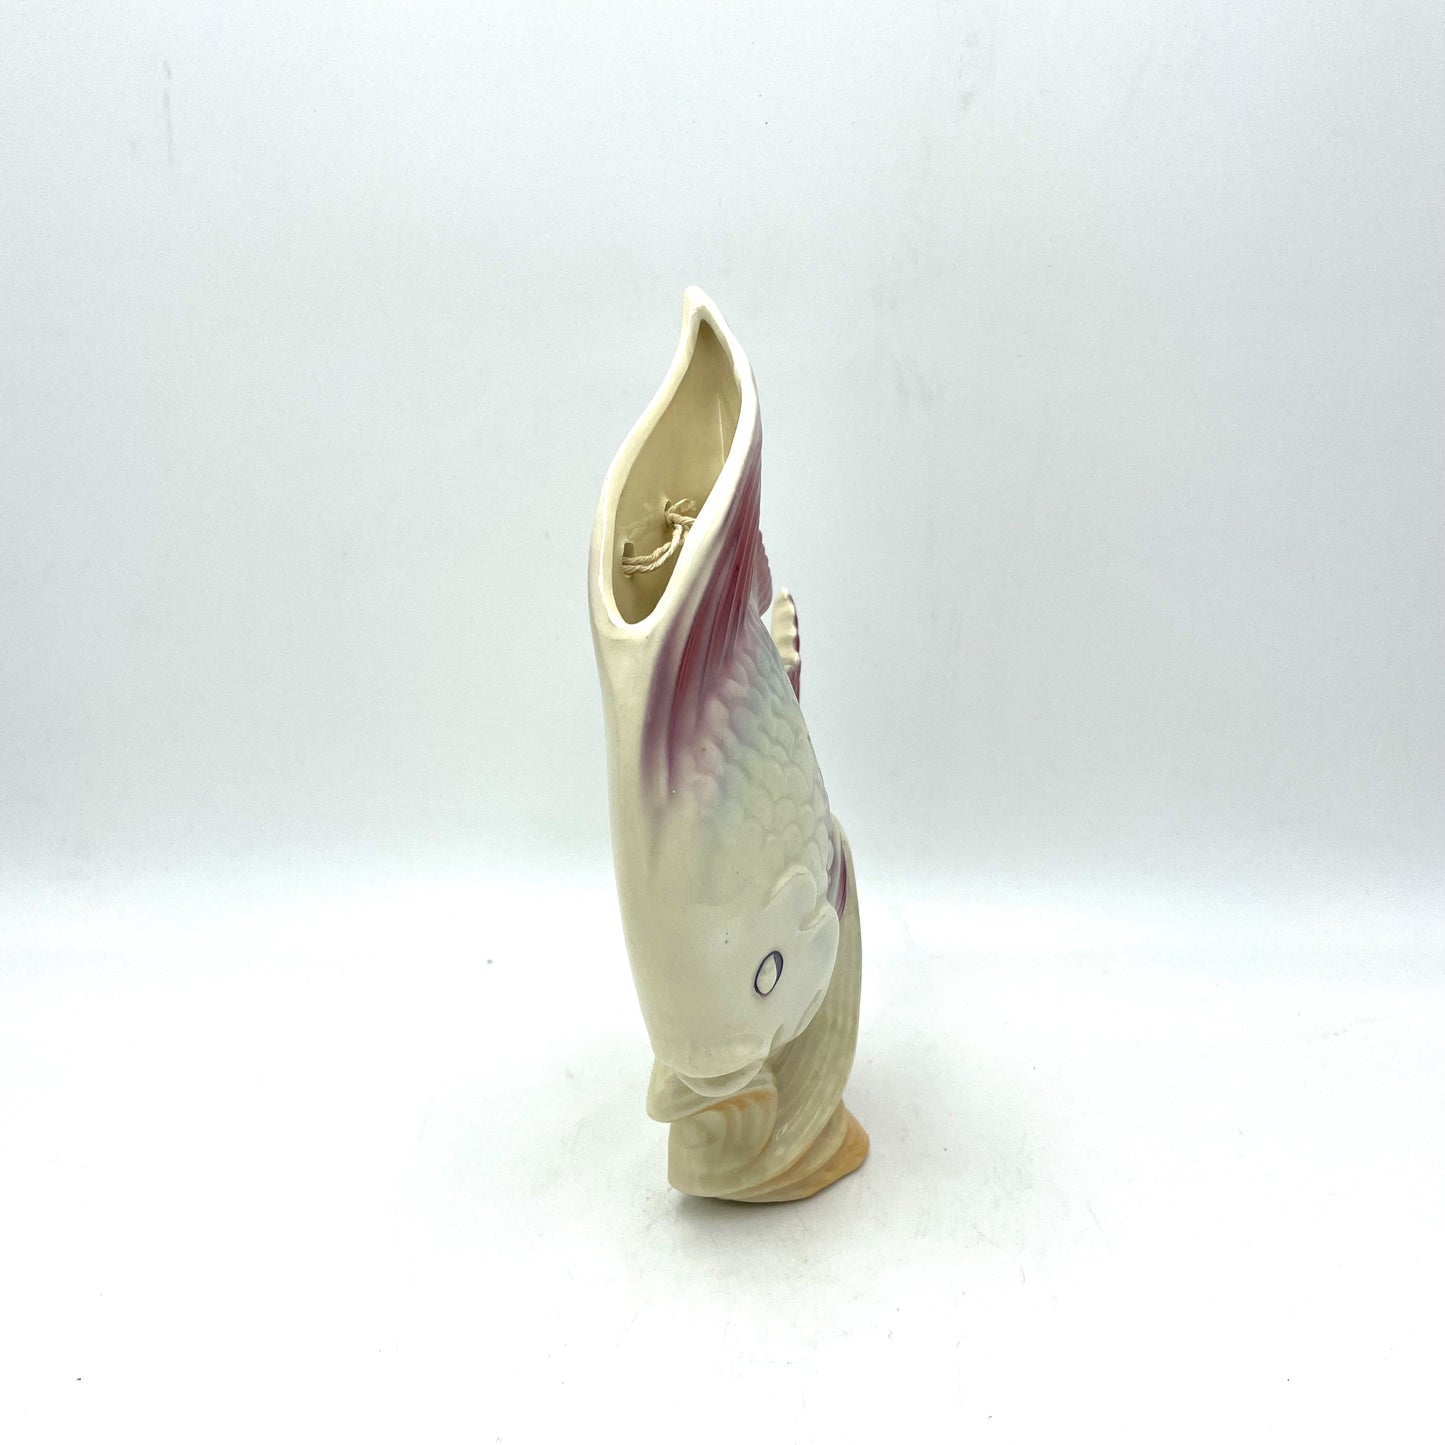 Lustre Ware Fish Wall Vase - 21cm